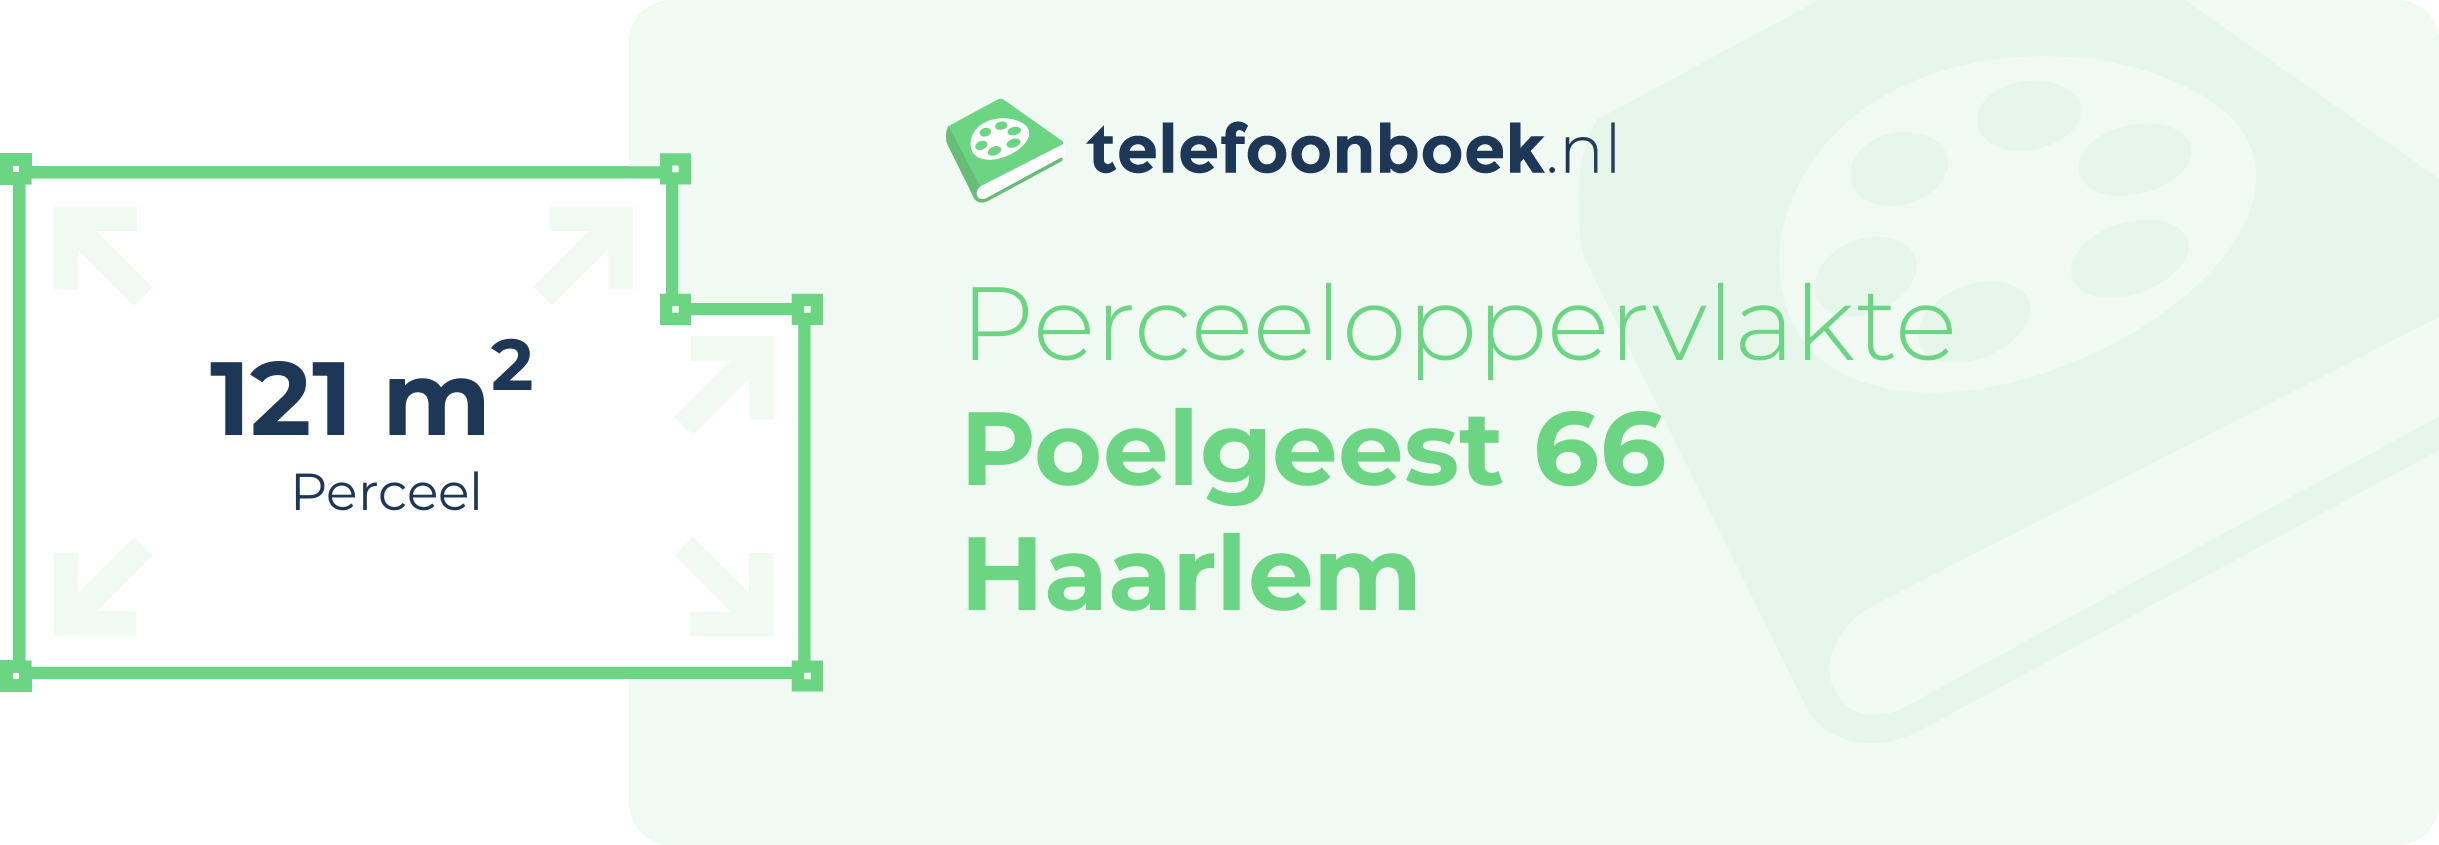 Perceeloppervlakte Poelgeest 66 Haarlem